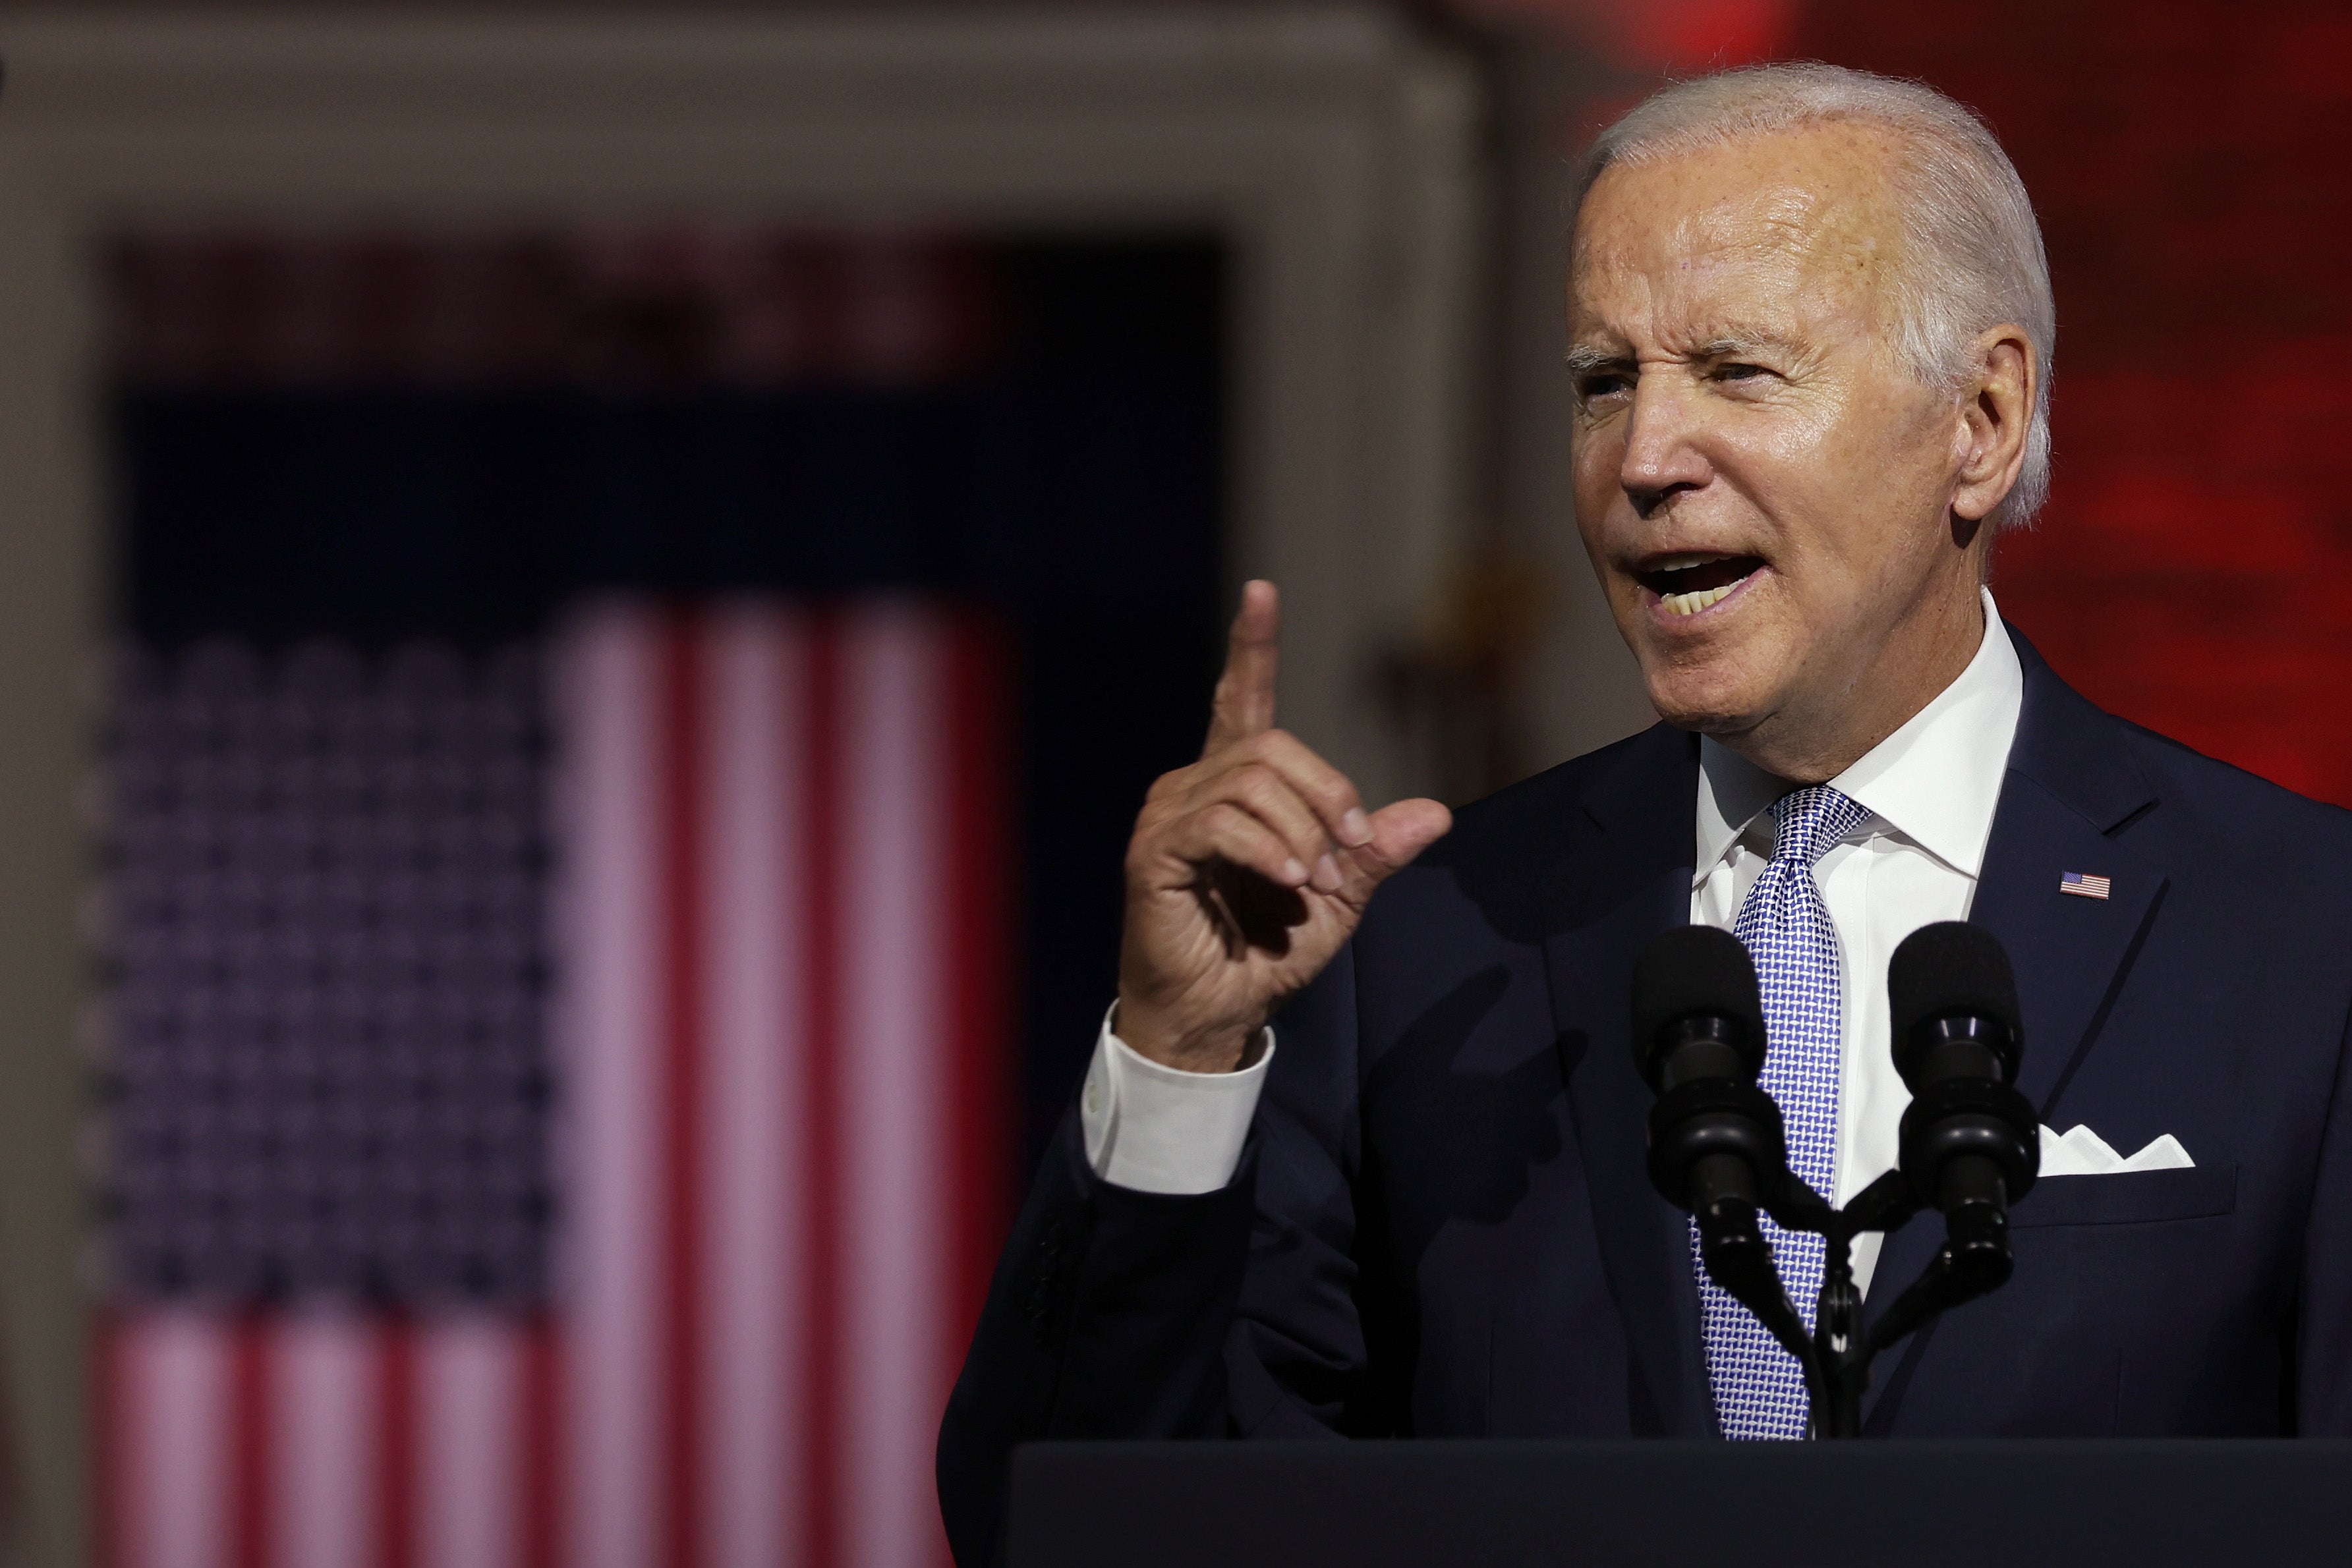 Joe Biden gave his speech at the Independence National Historical Park in Philadelphia